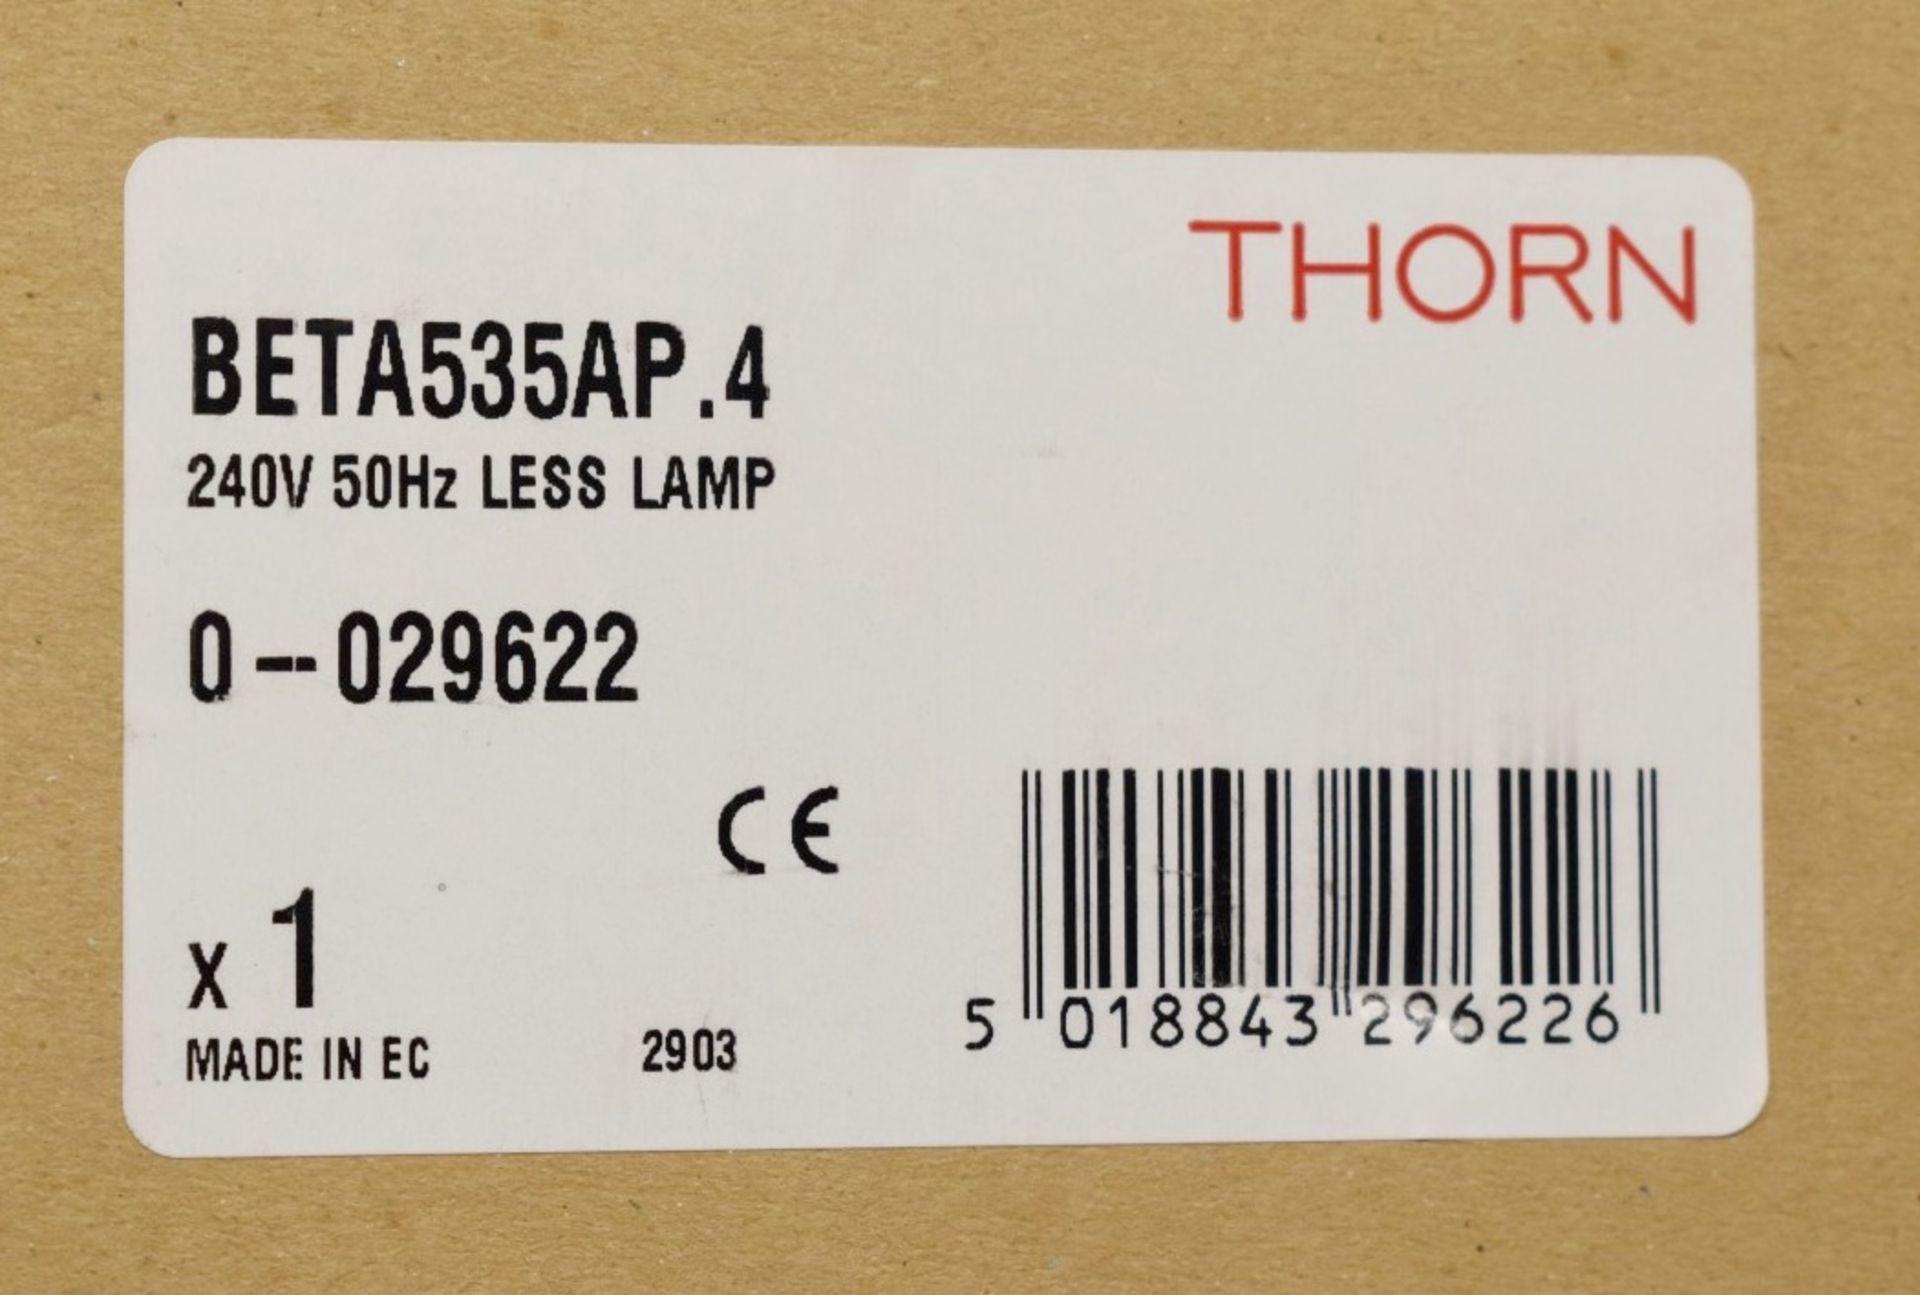 2 x Thorn BETA 5 35W Street Lantern with Bowl and Nema Socket - New Stock - 240V 50Hz - BETA535AP.4 - Image 2 of 2